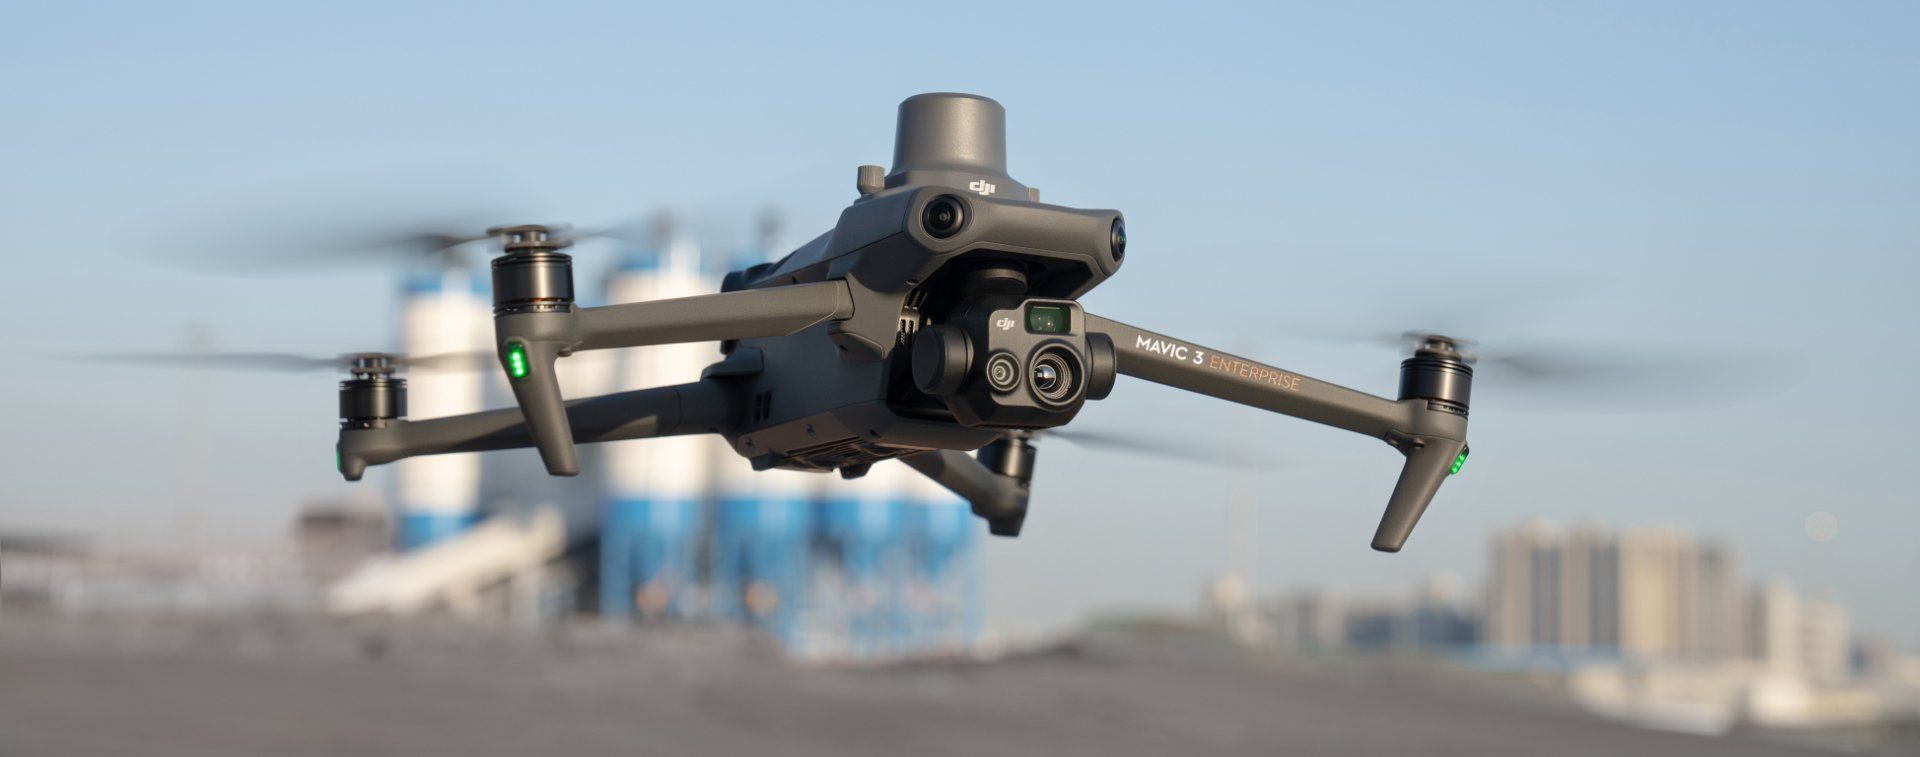 Mavic 3 Enterprise Drone for Survey and Inspection